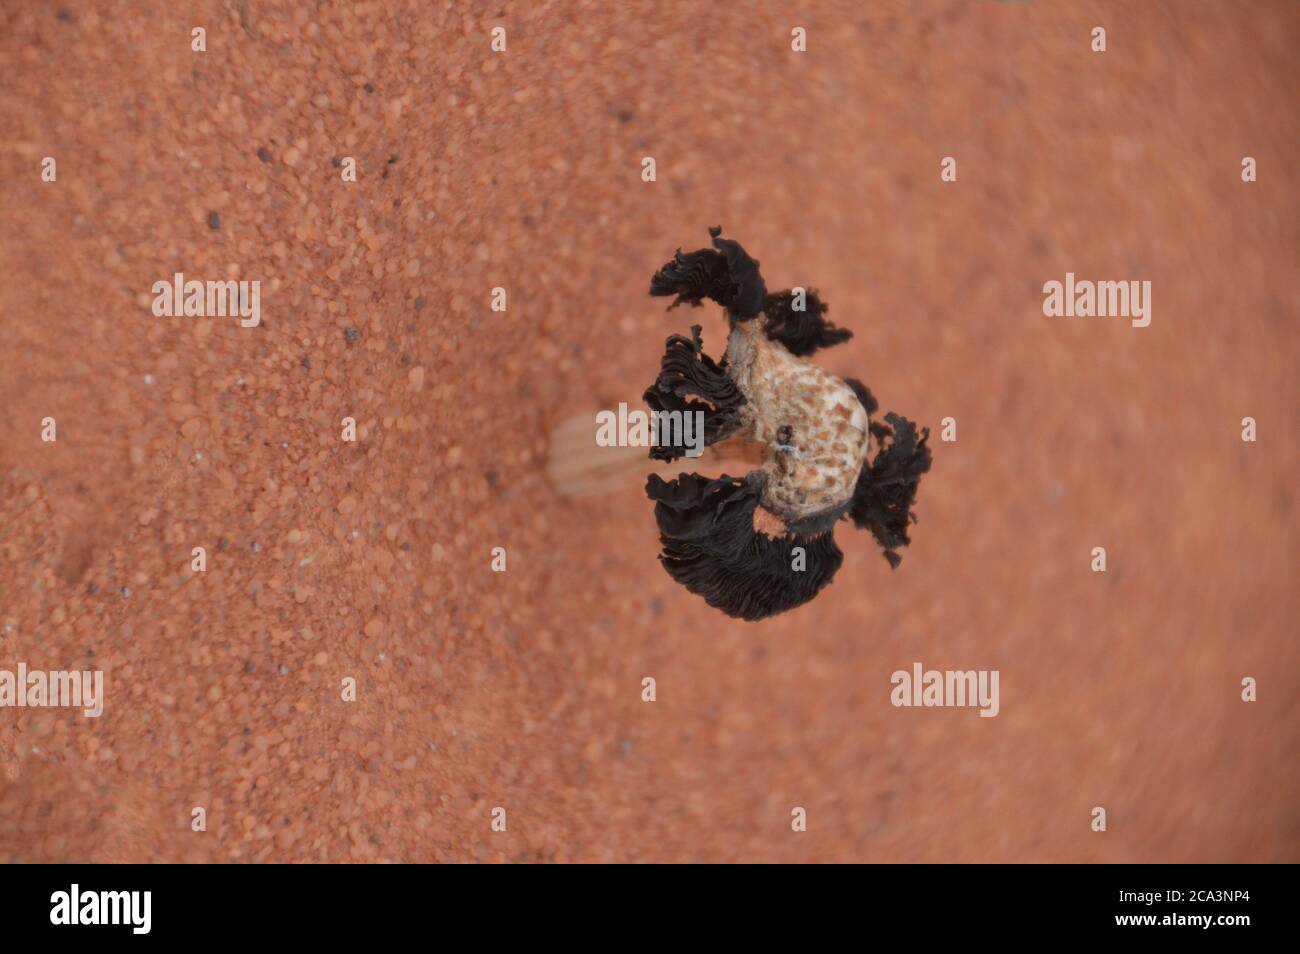 Algeria, Illizi, Tassili N'Ajjer National Park:  Podaxis pistillaria, a widespread puffball fungus, after dispersal of its spores. Stock Photo